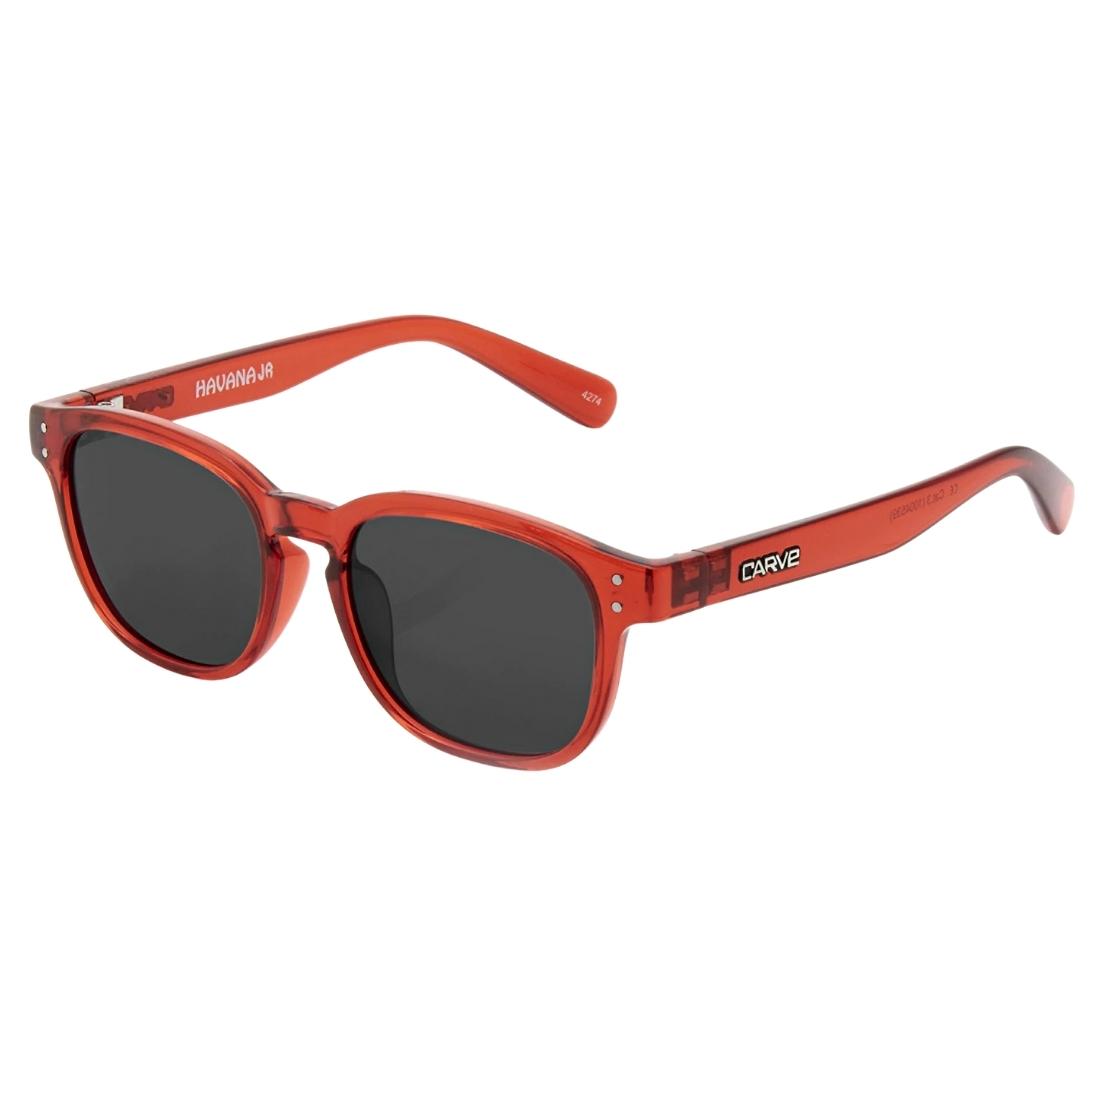 Carve Havana Jr Youth Kids Sunglasses - Gloss Crystal Red